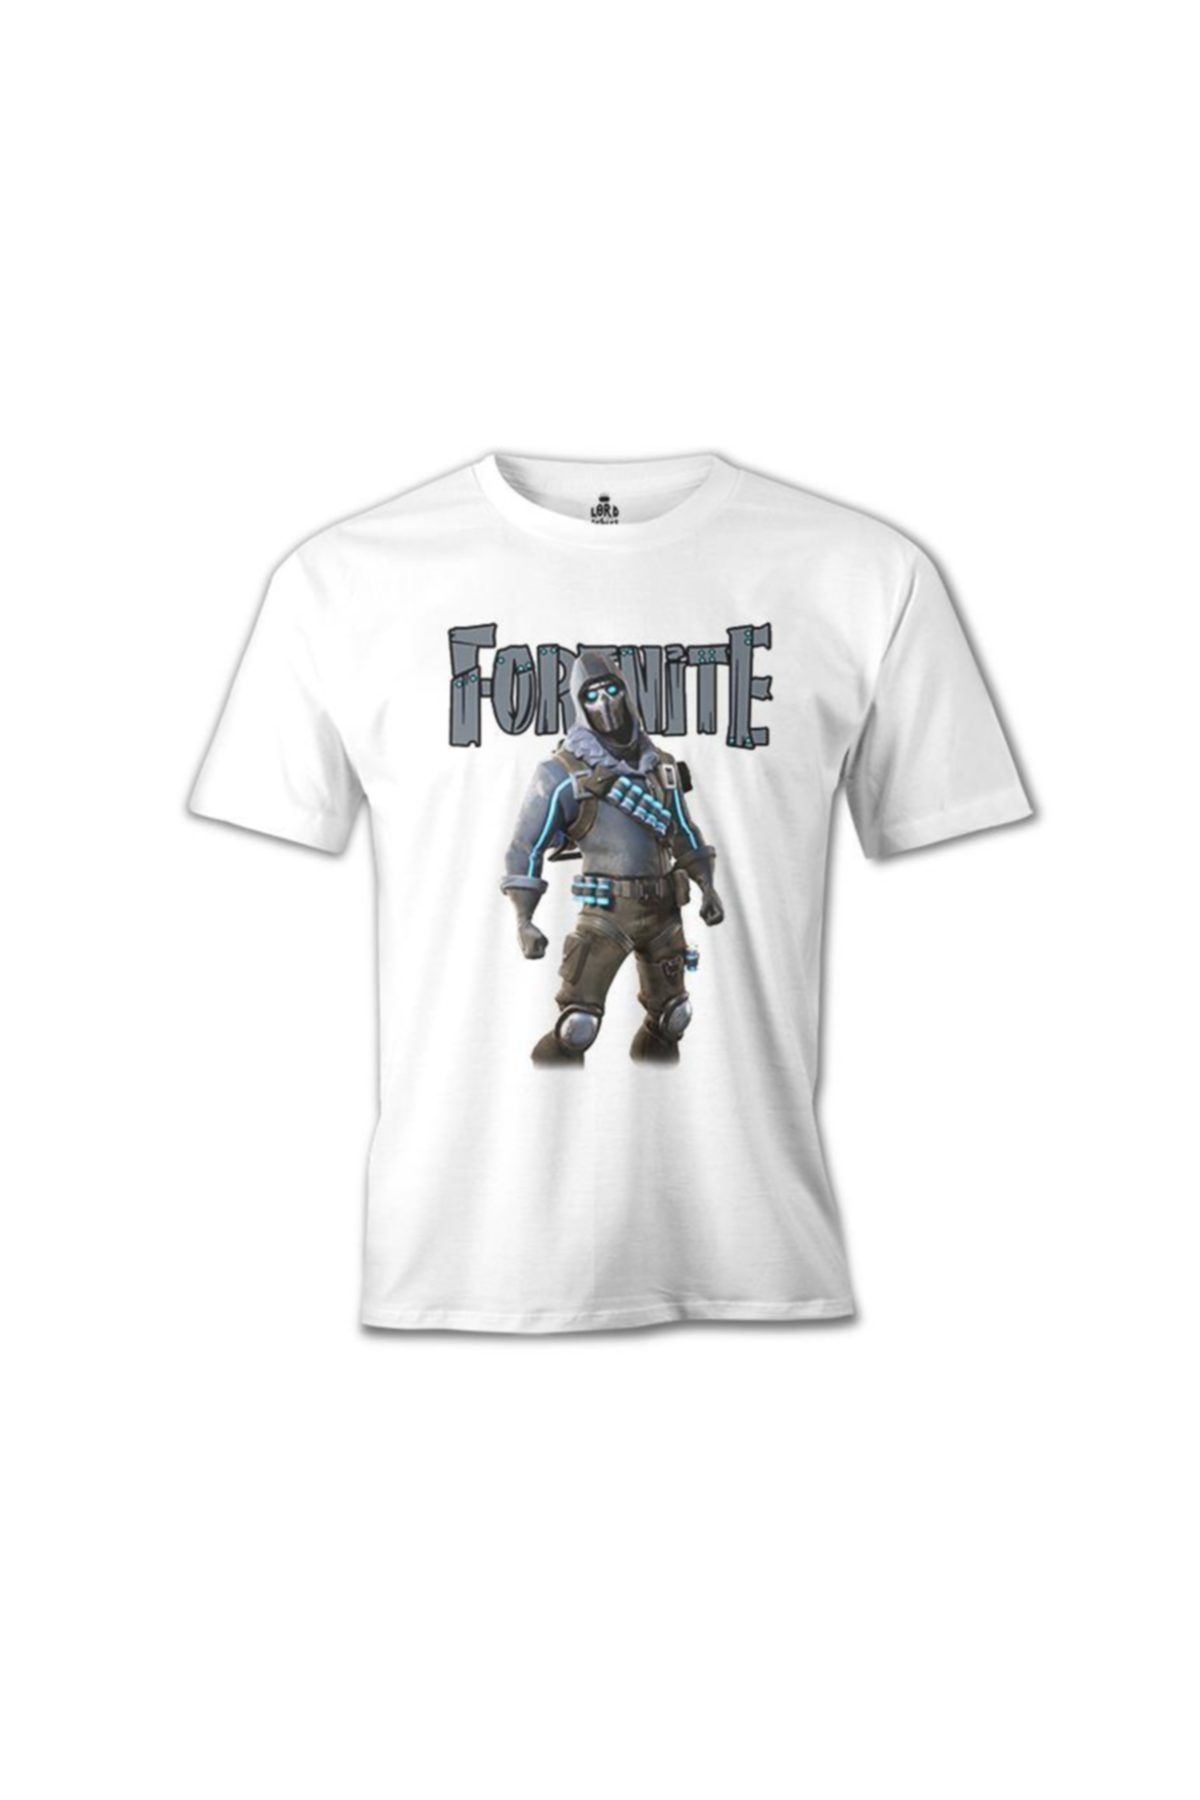 Lord T-Shirt Fortnite - Vulture Beyaz Erkek Tshirt